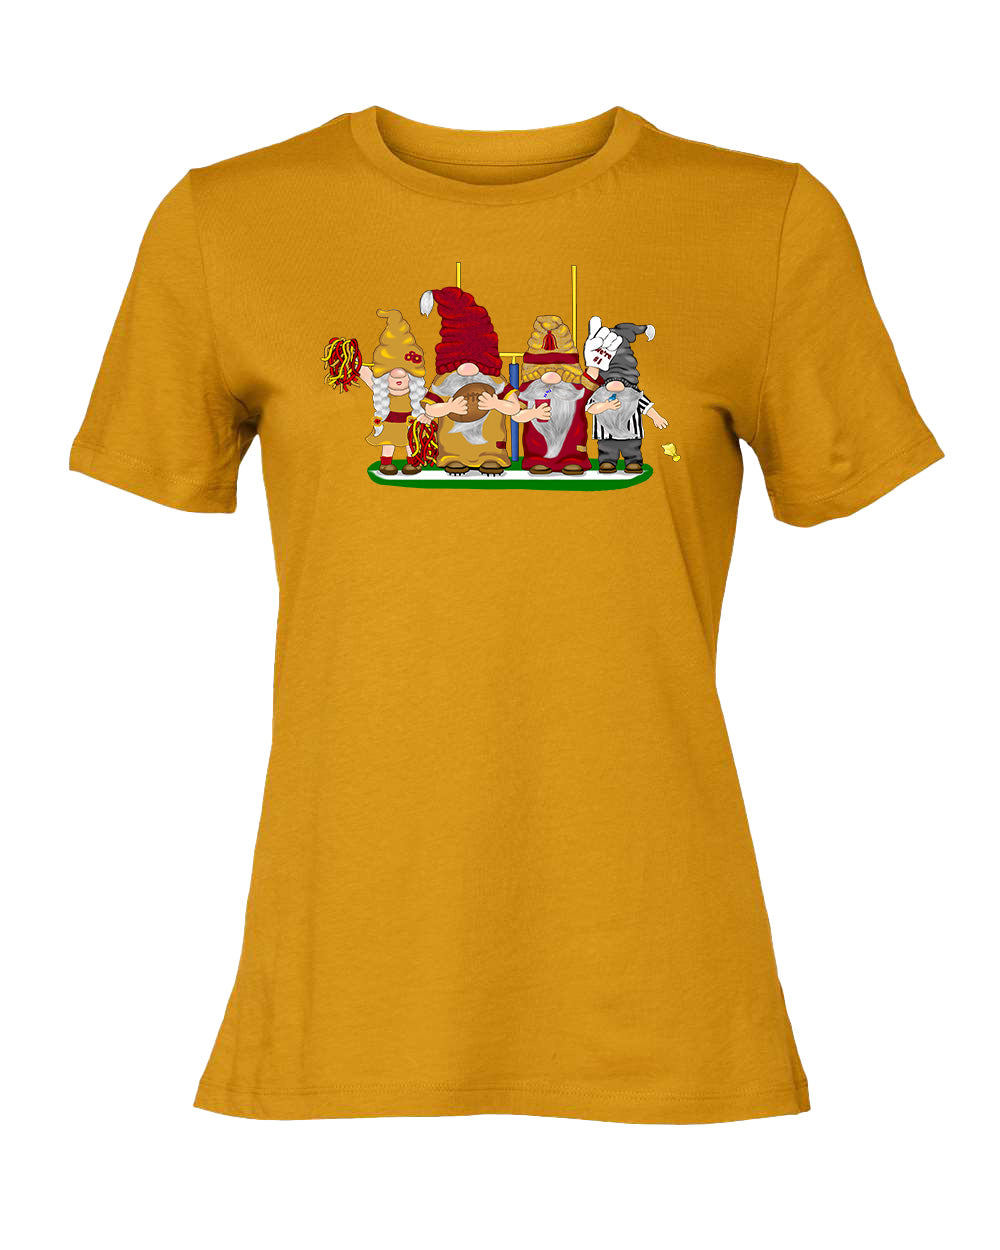 Burgundy & Gold Football Gnomes on Women's T-shirt (similar to DC)